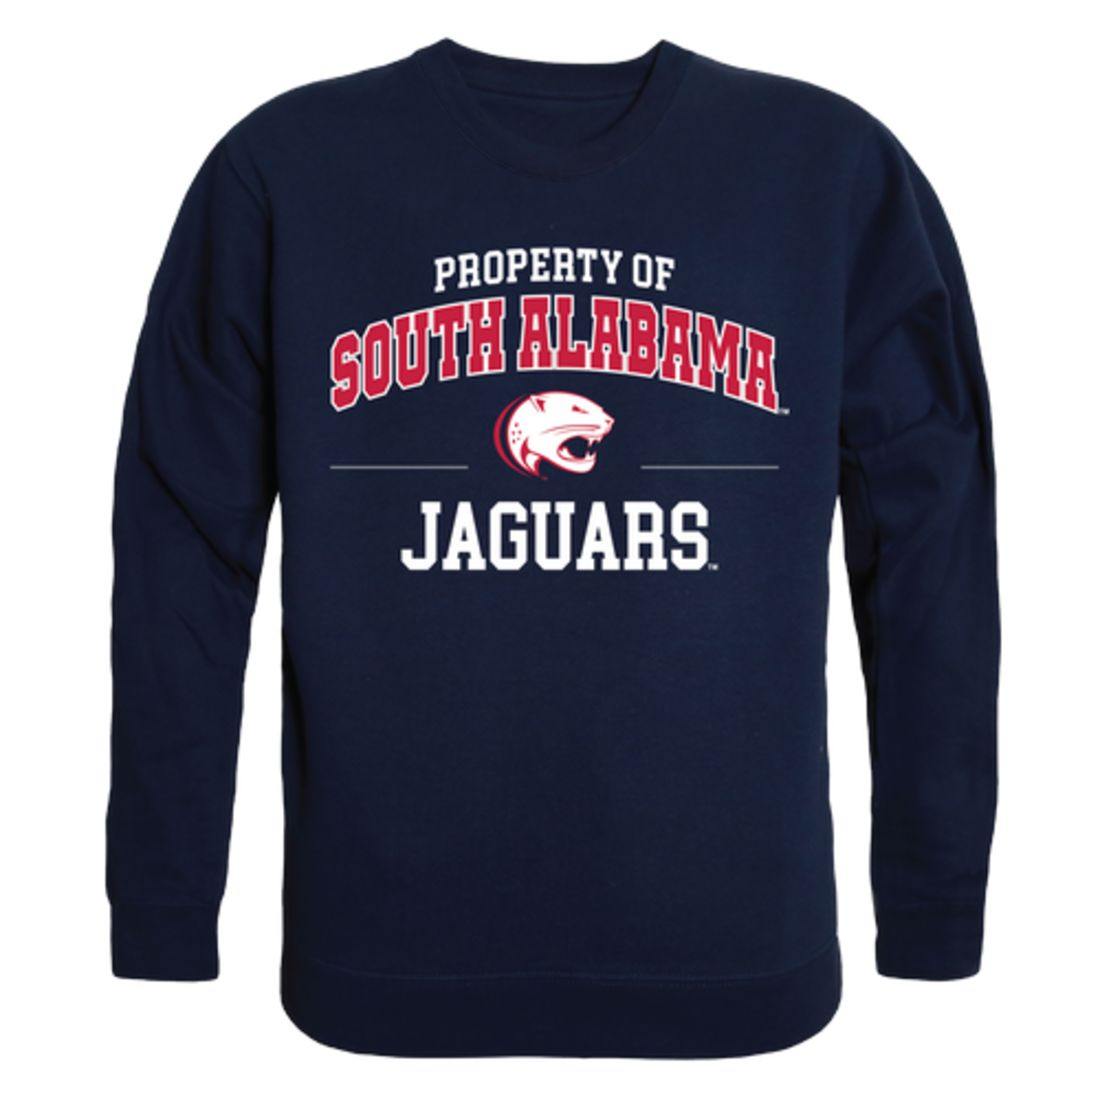 University of South Alabama Jaguars Property Crewneck Pullover Sweatshirt Sweater Navy-Campus-Wardrobe